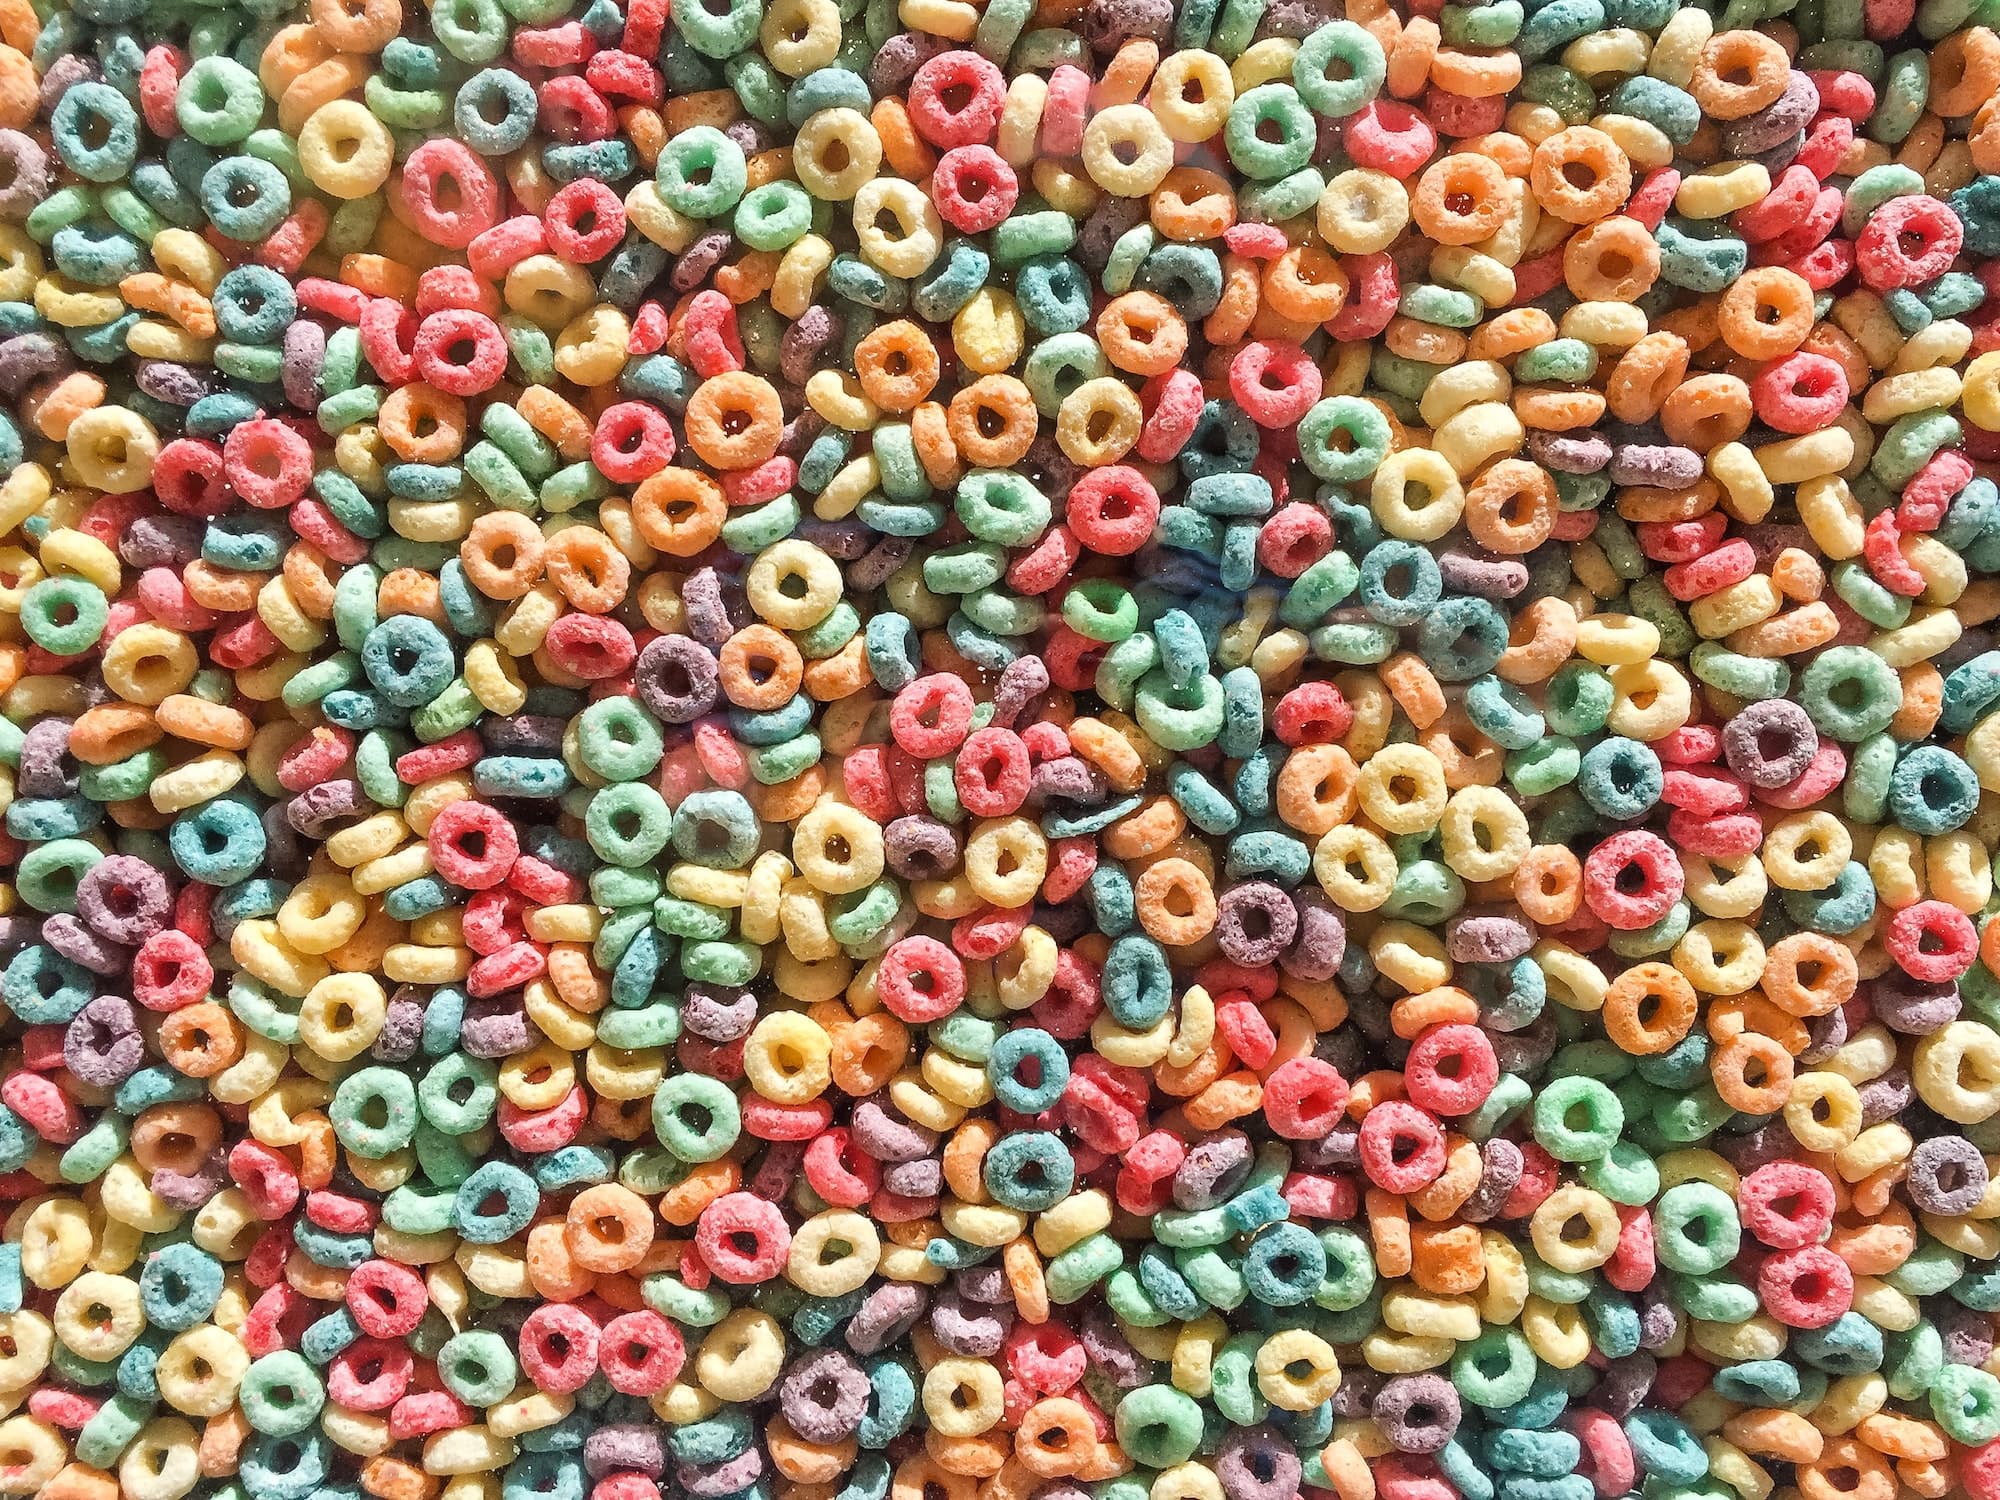 Fruit loops cereal